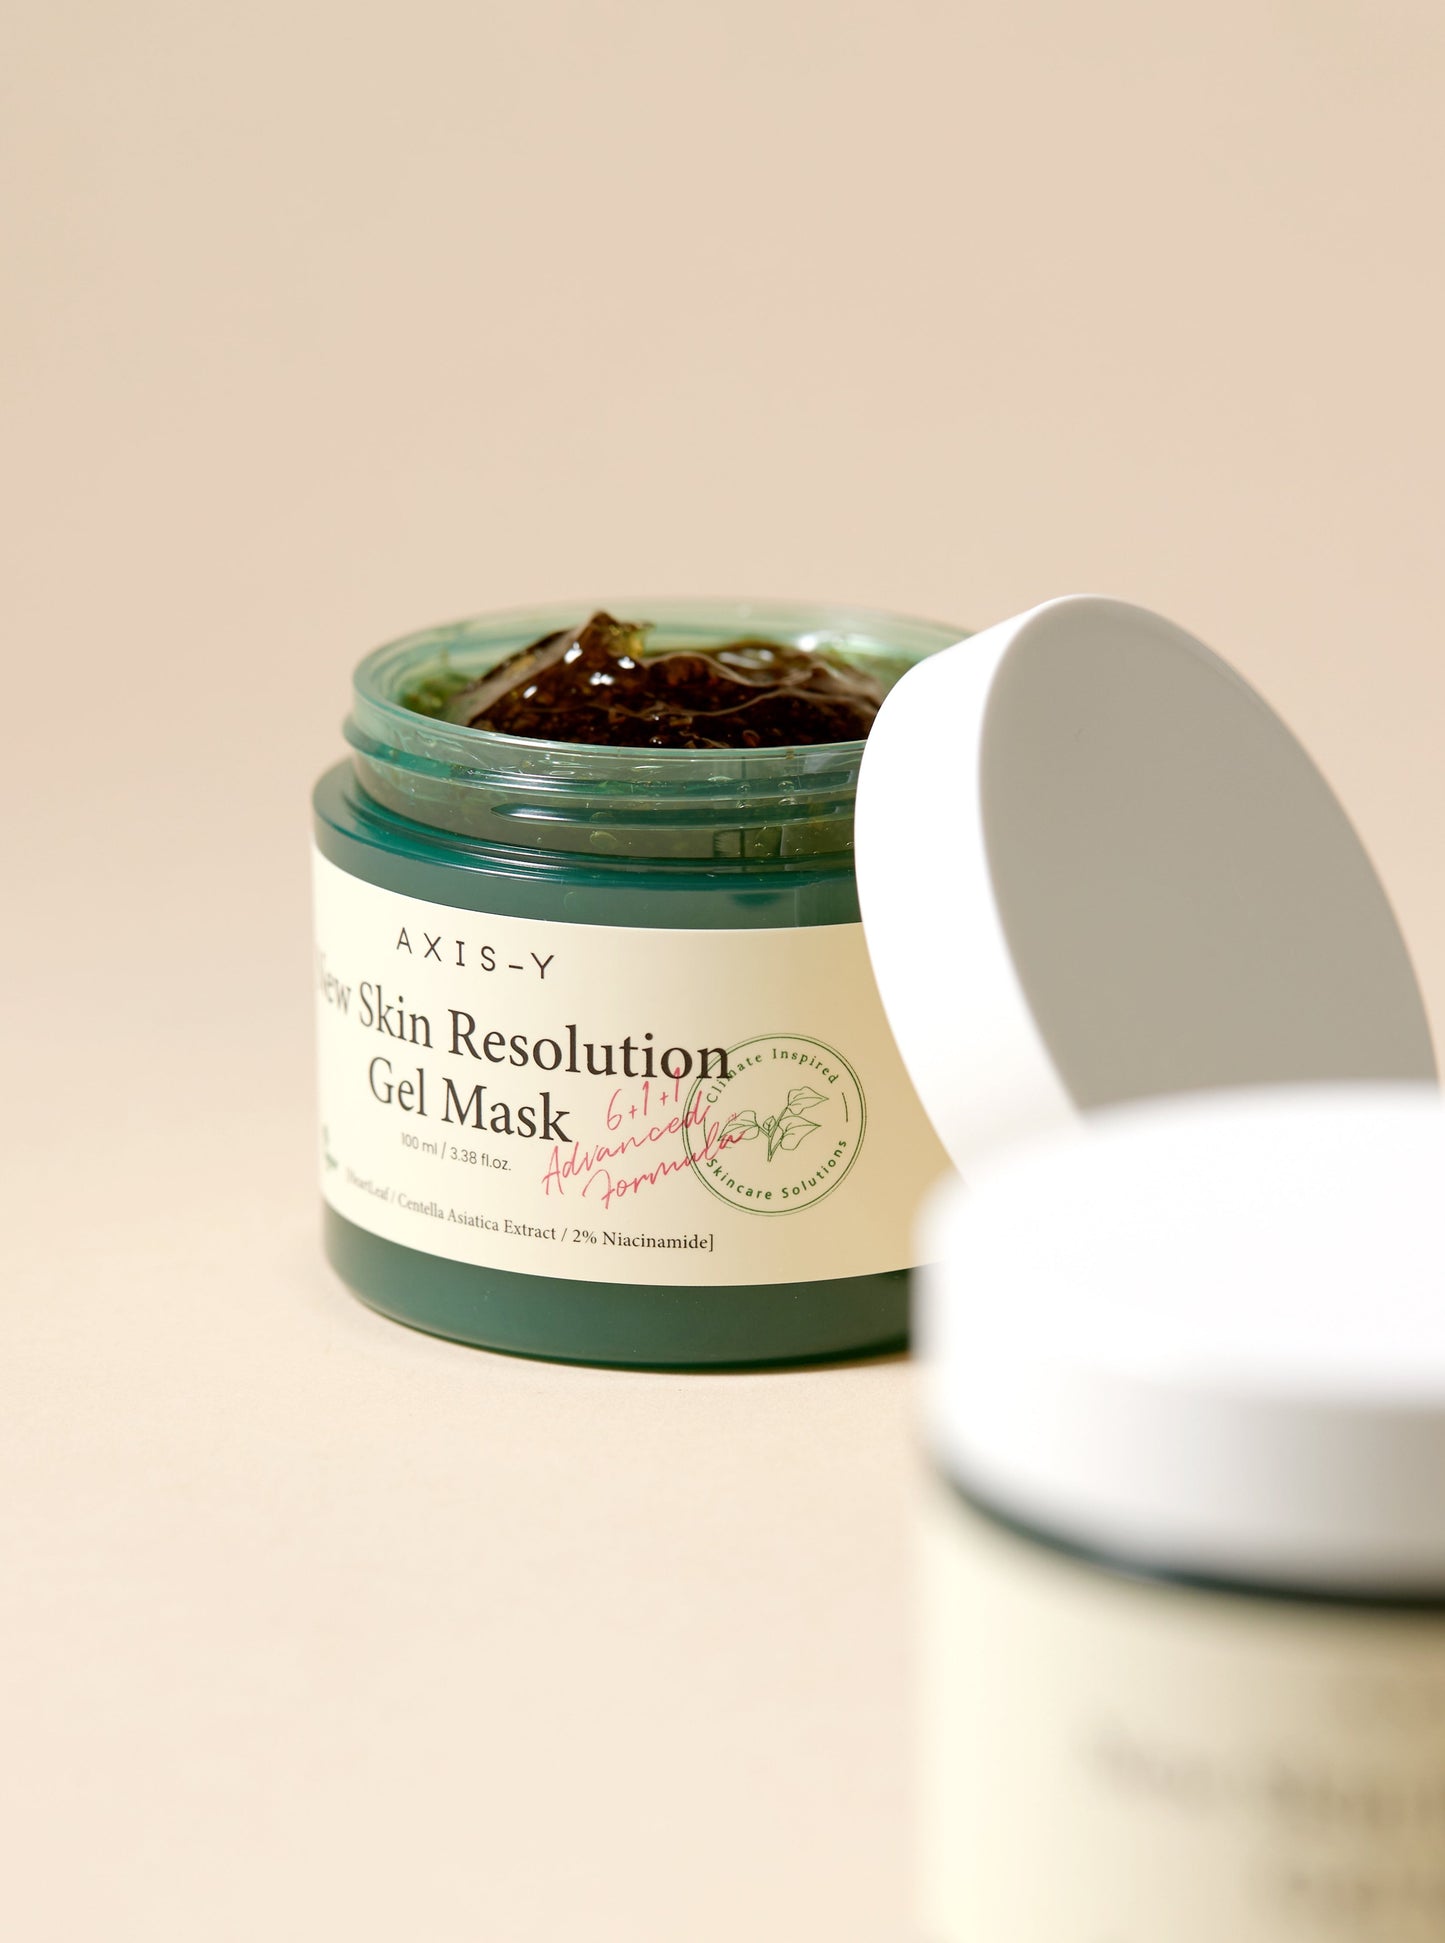 Axis-y New Skin Resolution Gel Mask